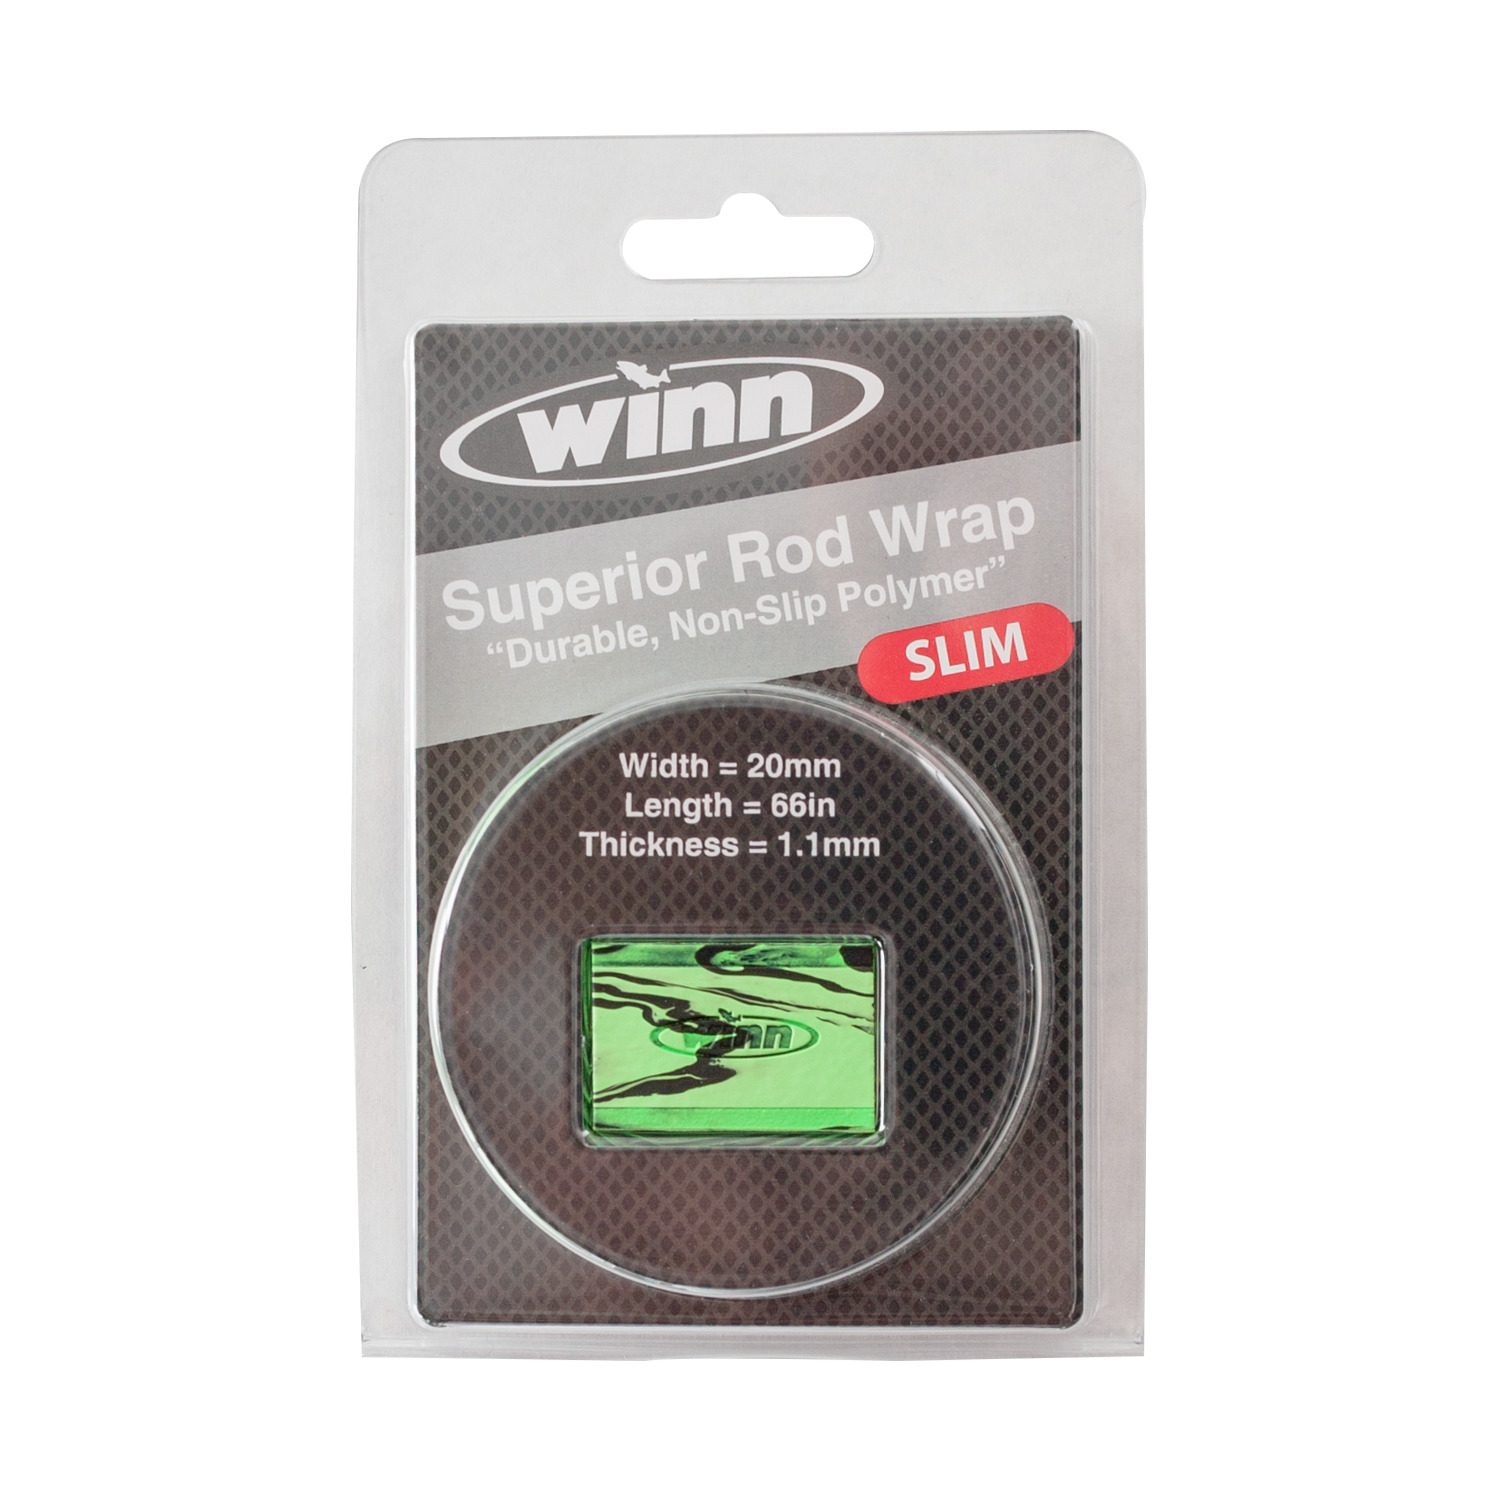 Winn Grips Slim Polymer Rod Grip Overwraps